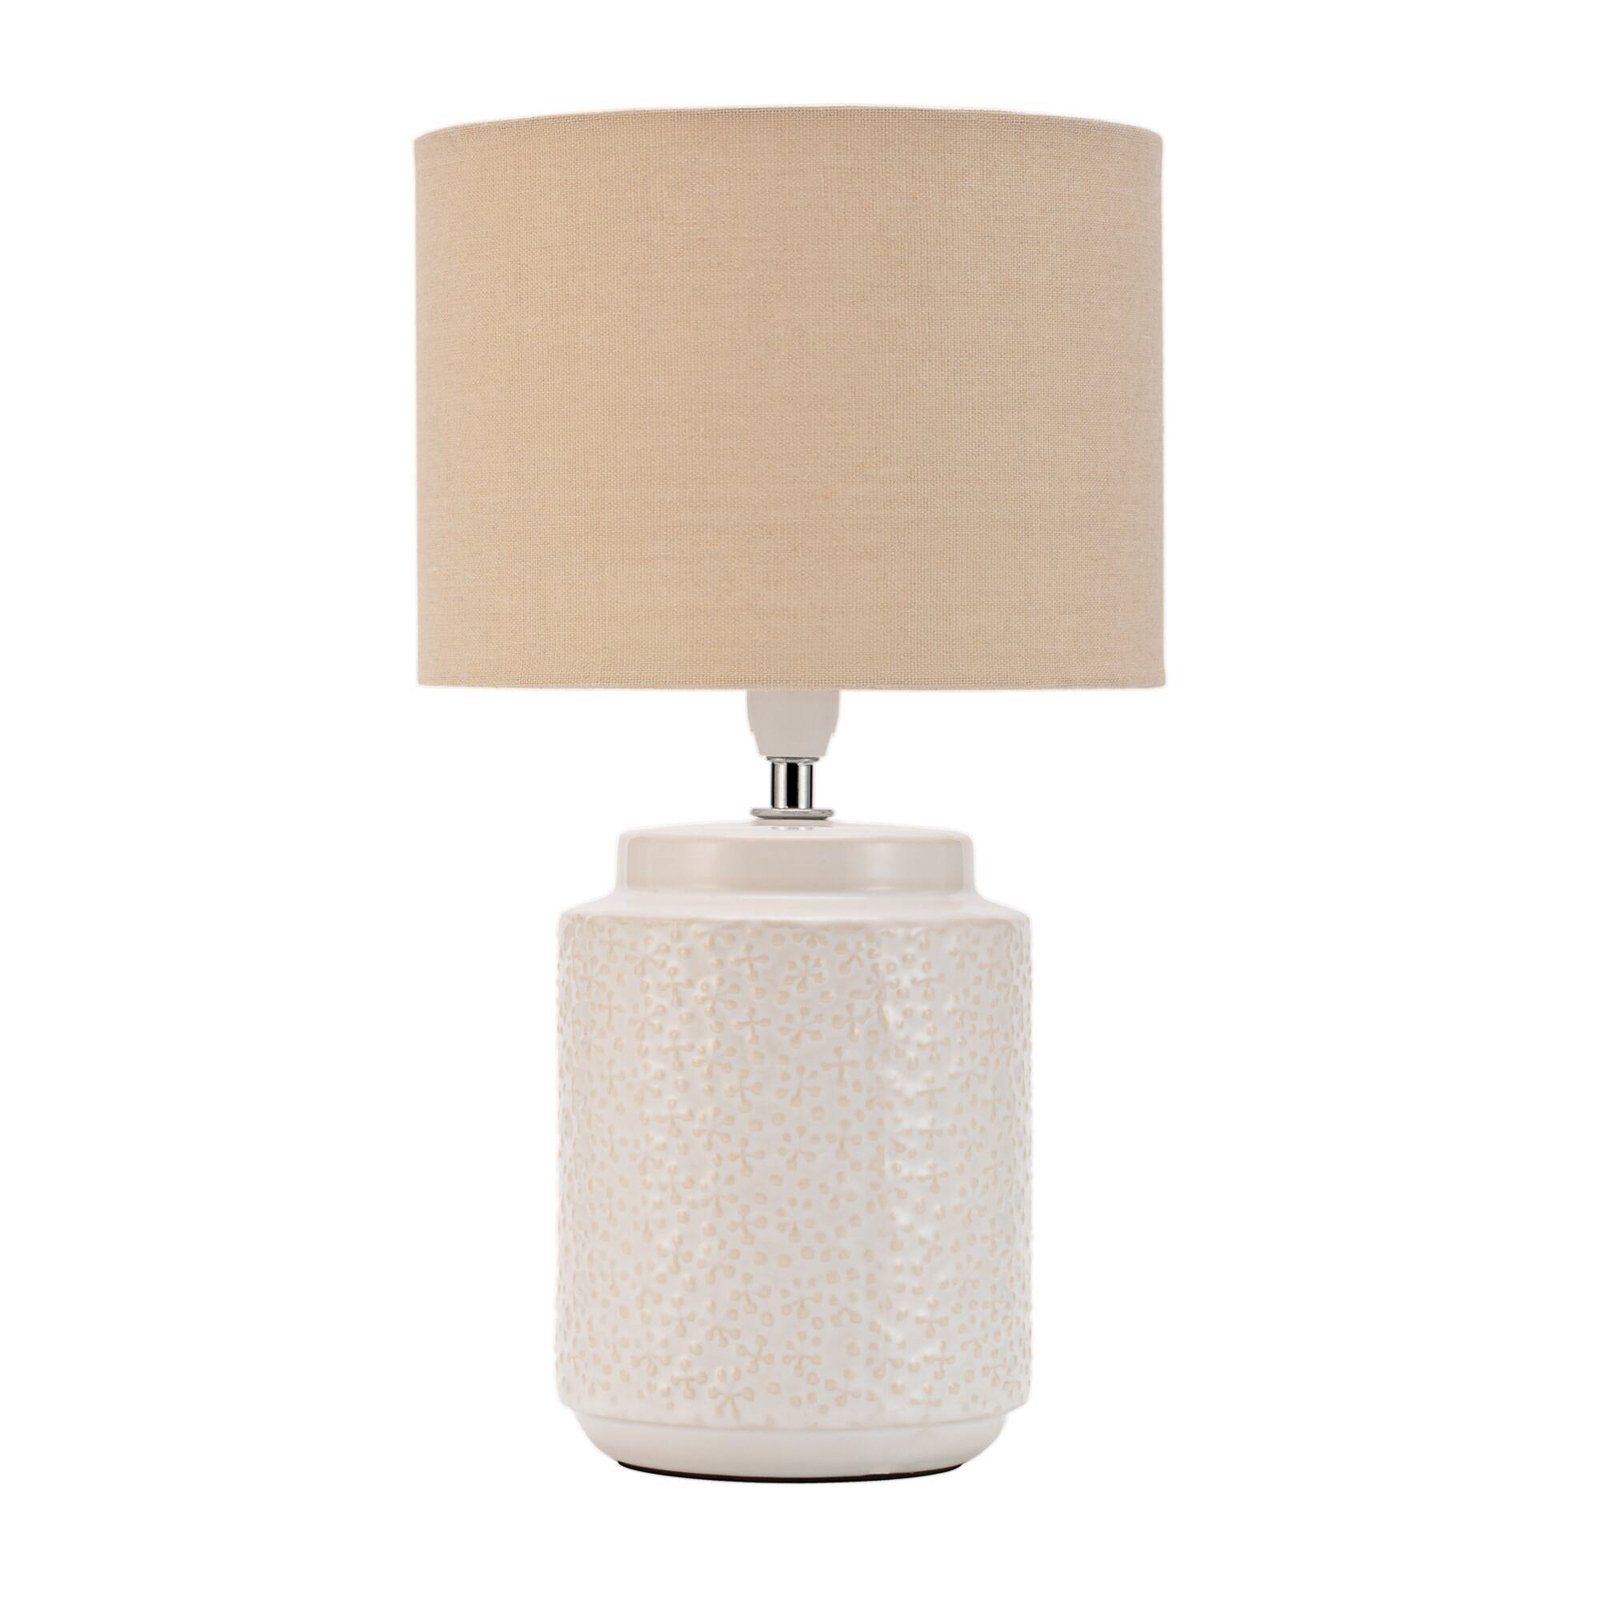 Pauleen Charming Bloom table lamp, ceramic base